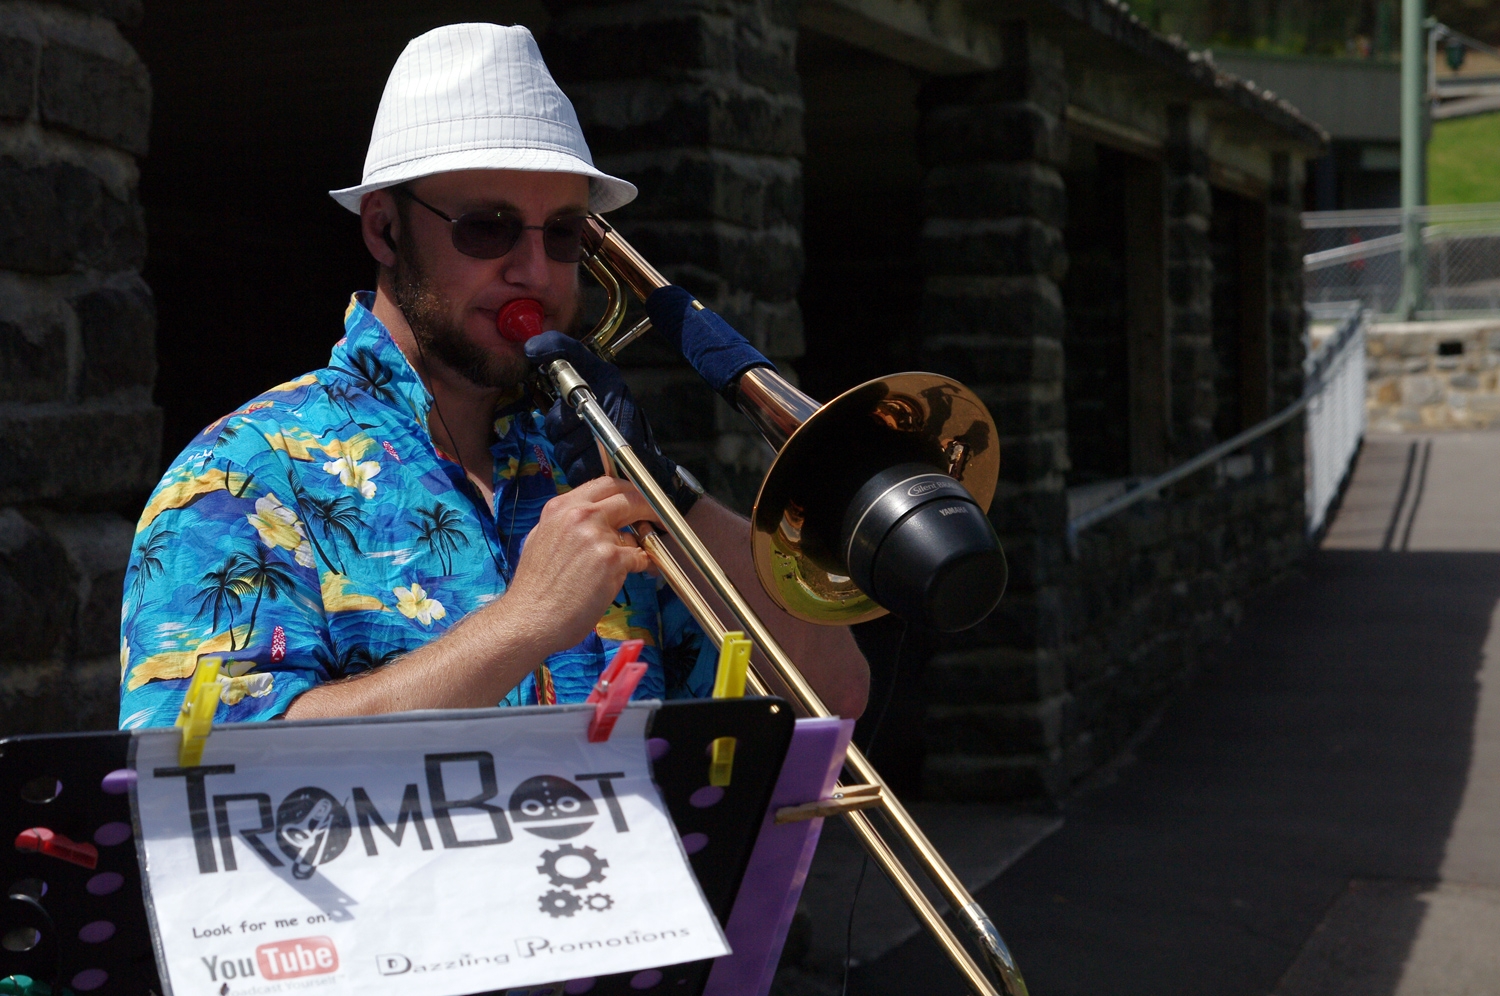 Trombot Live In Launceston